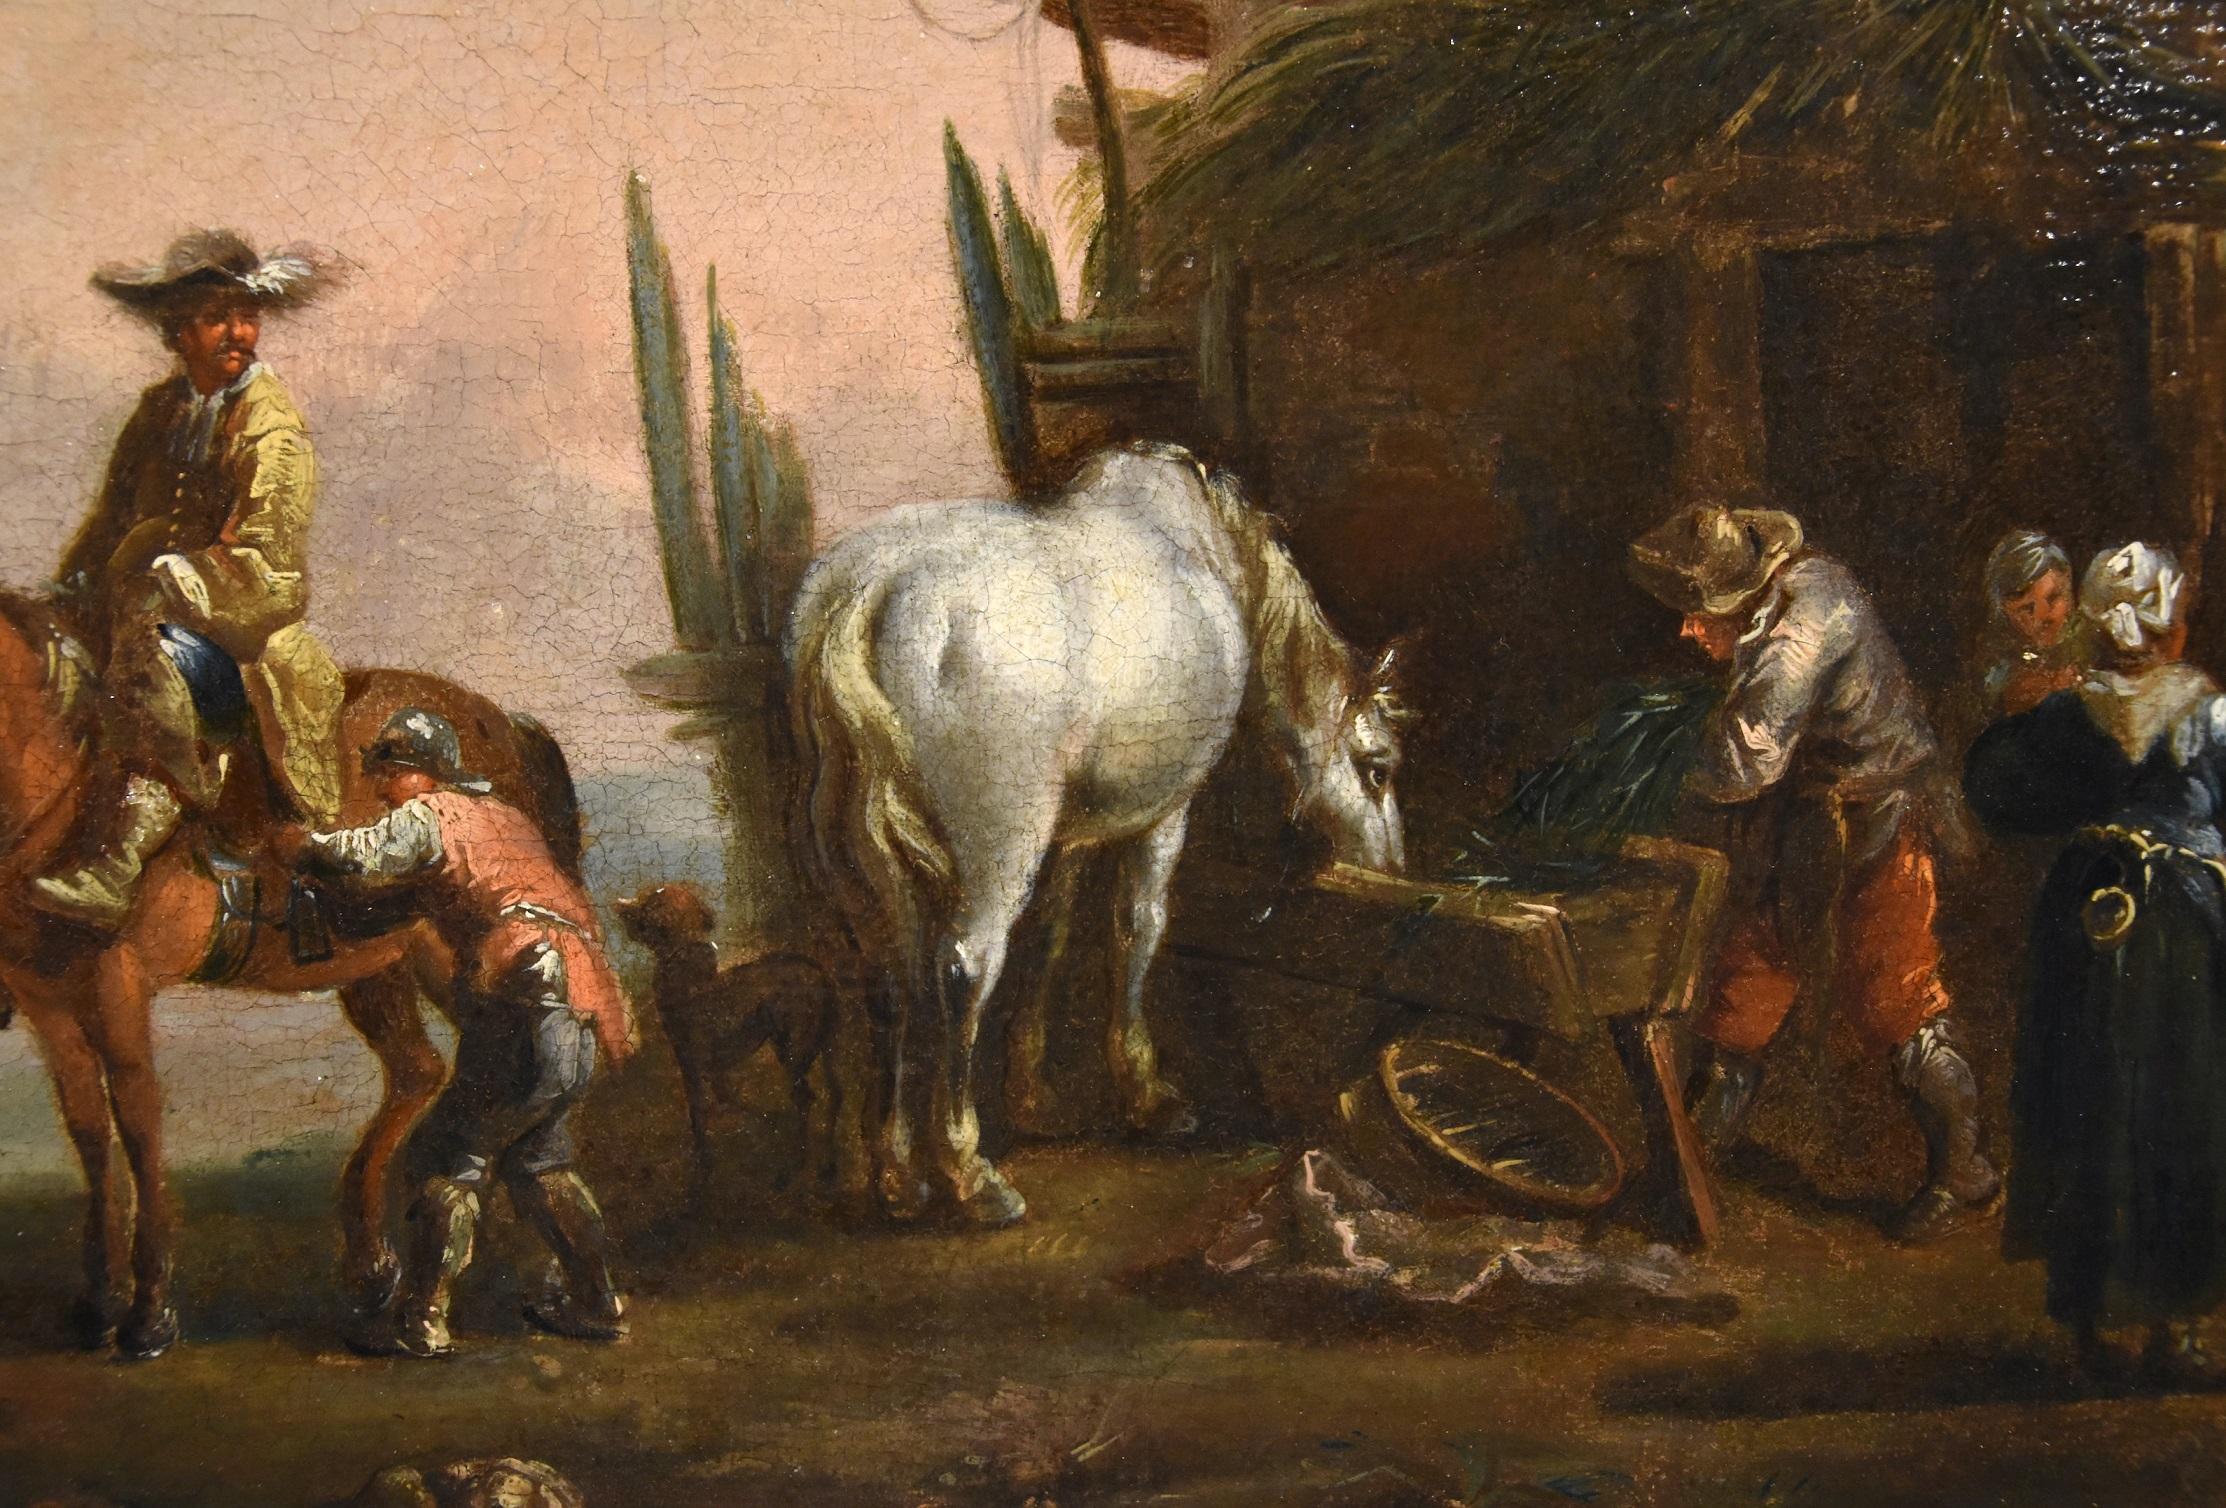 Knight Van Douw Paint Oil on canvas Old master 17/18th Century Flemish Art Italy For Sale 4